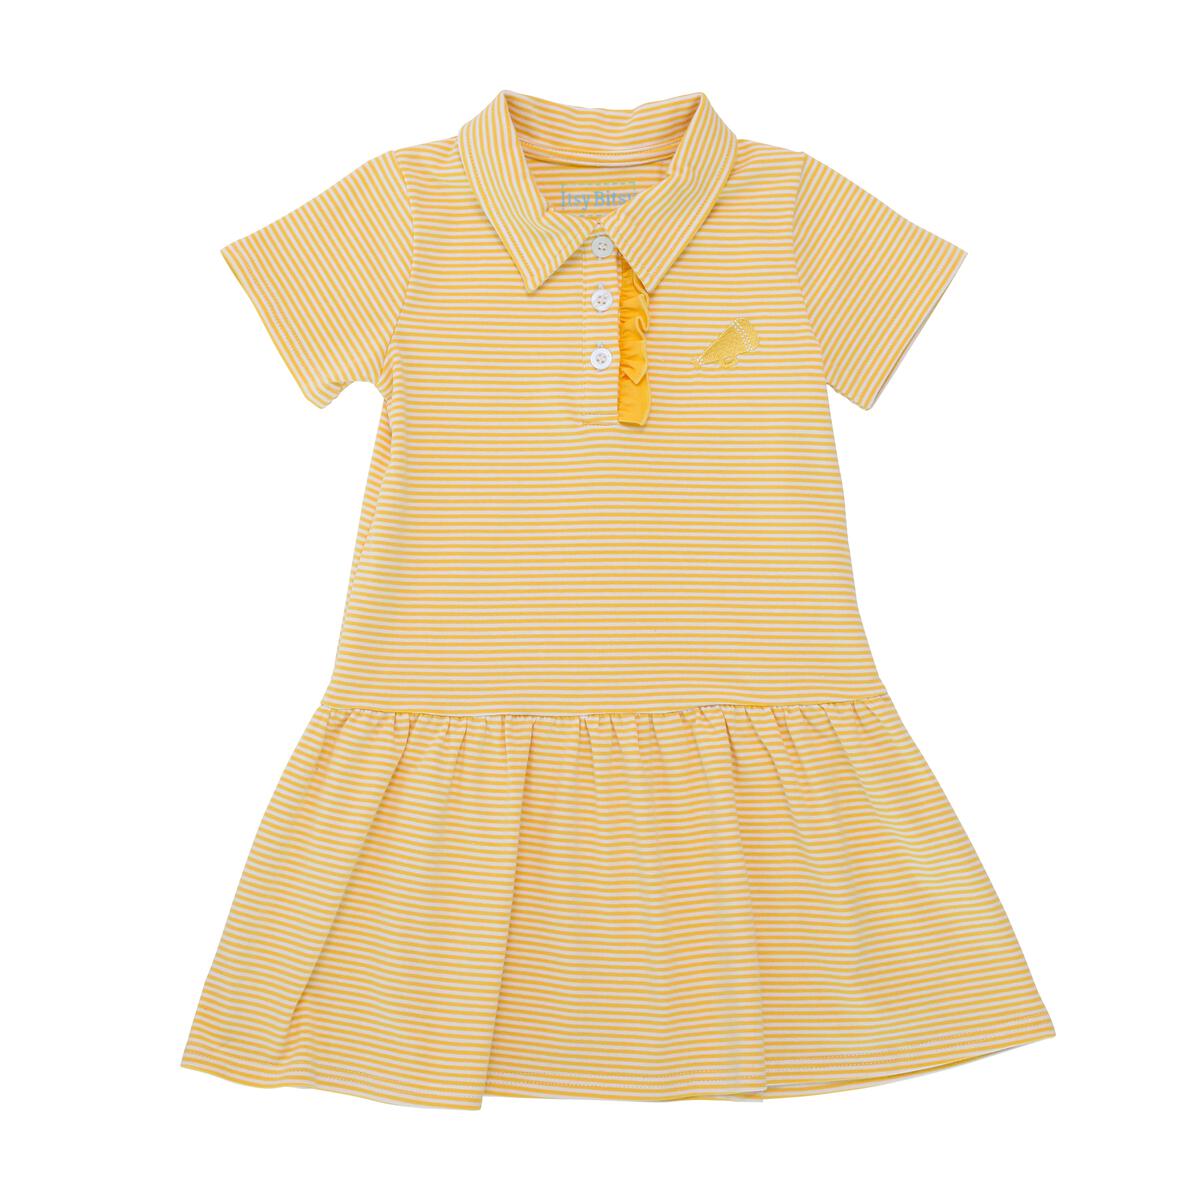 A girl's Megaphone Polo Dress- Yellow Stripe by Itsy Bitsy.